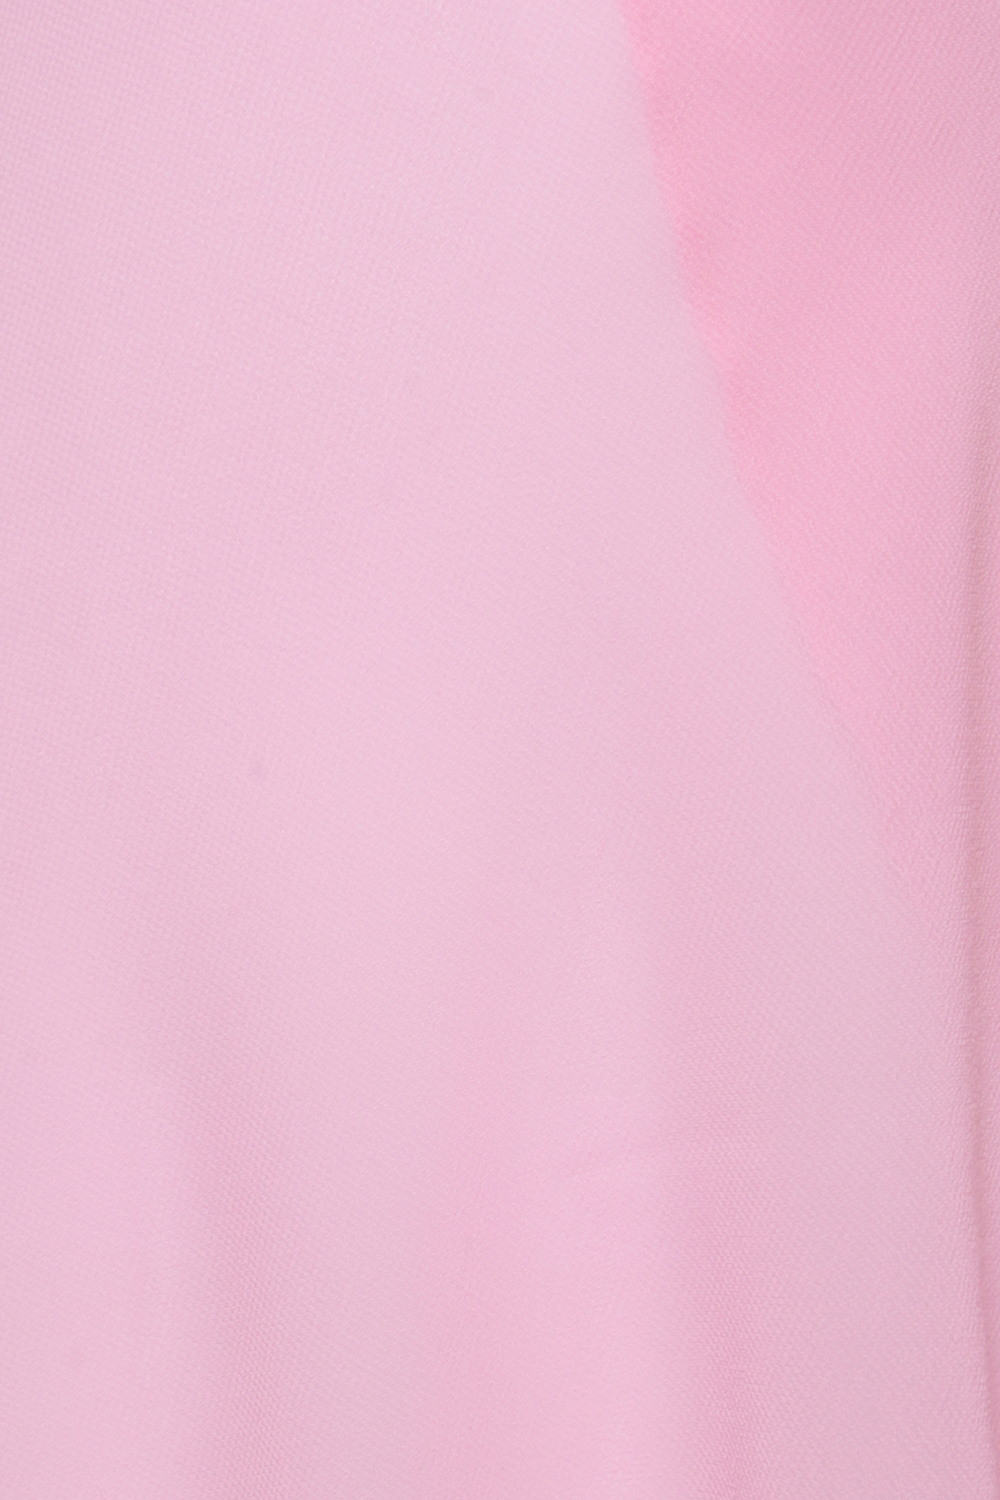 Розовая юбка на завязках